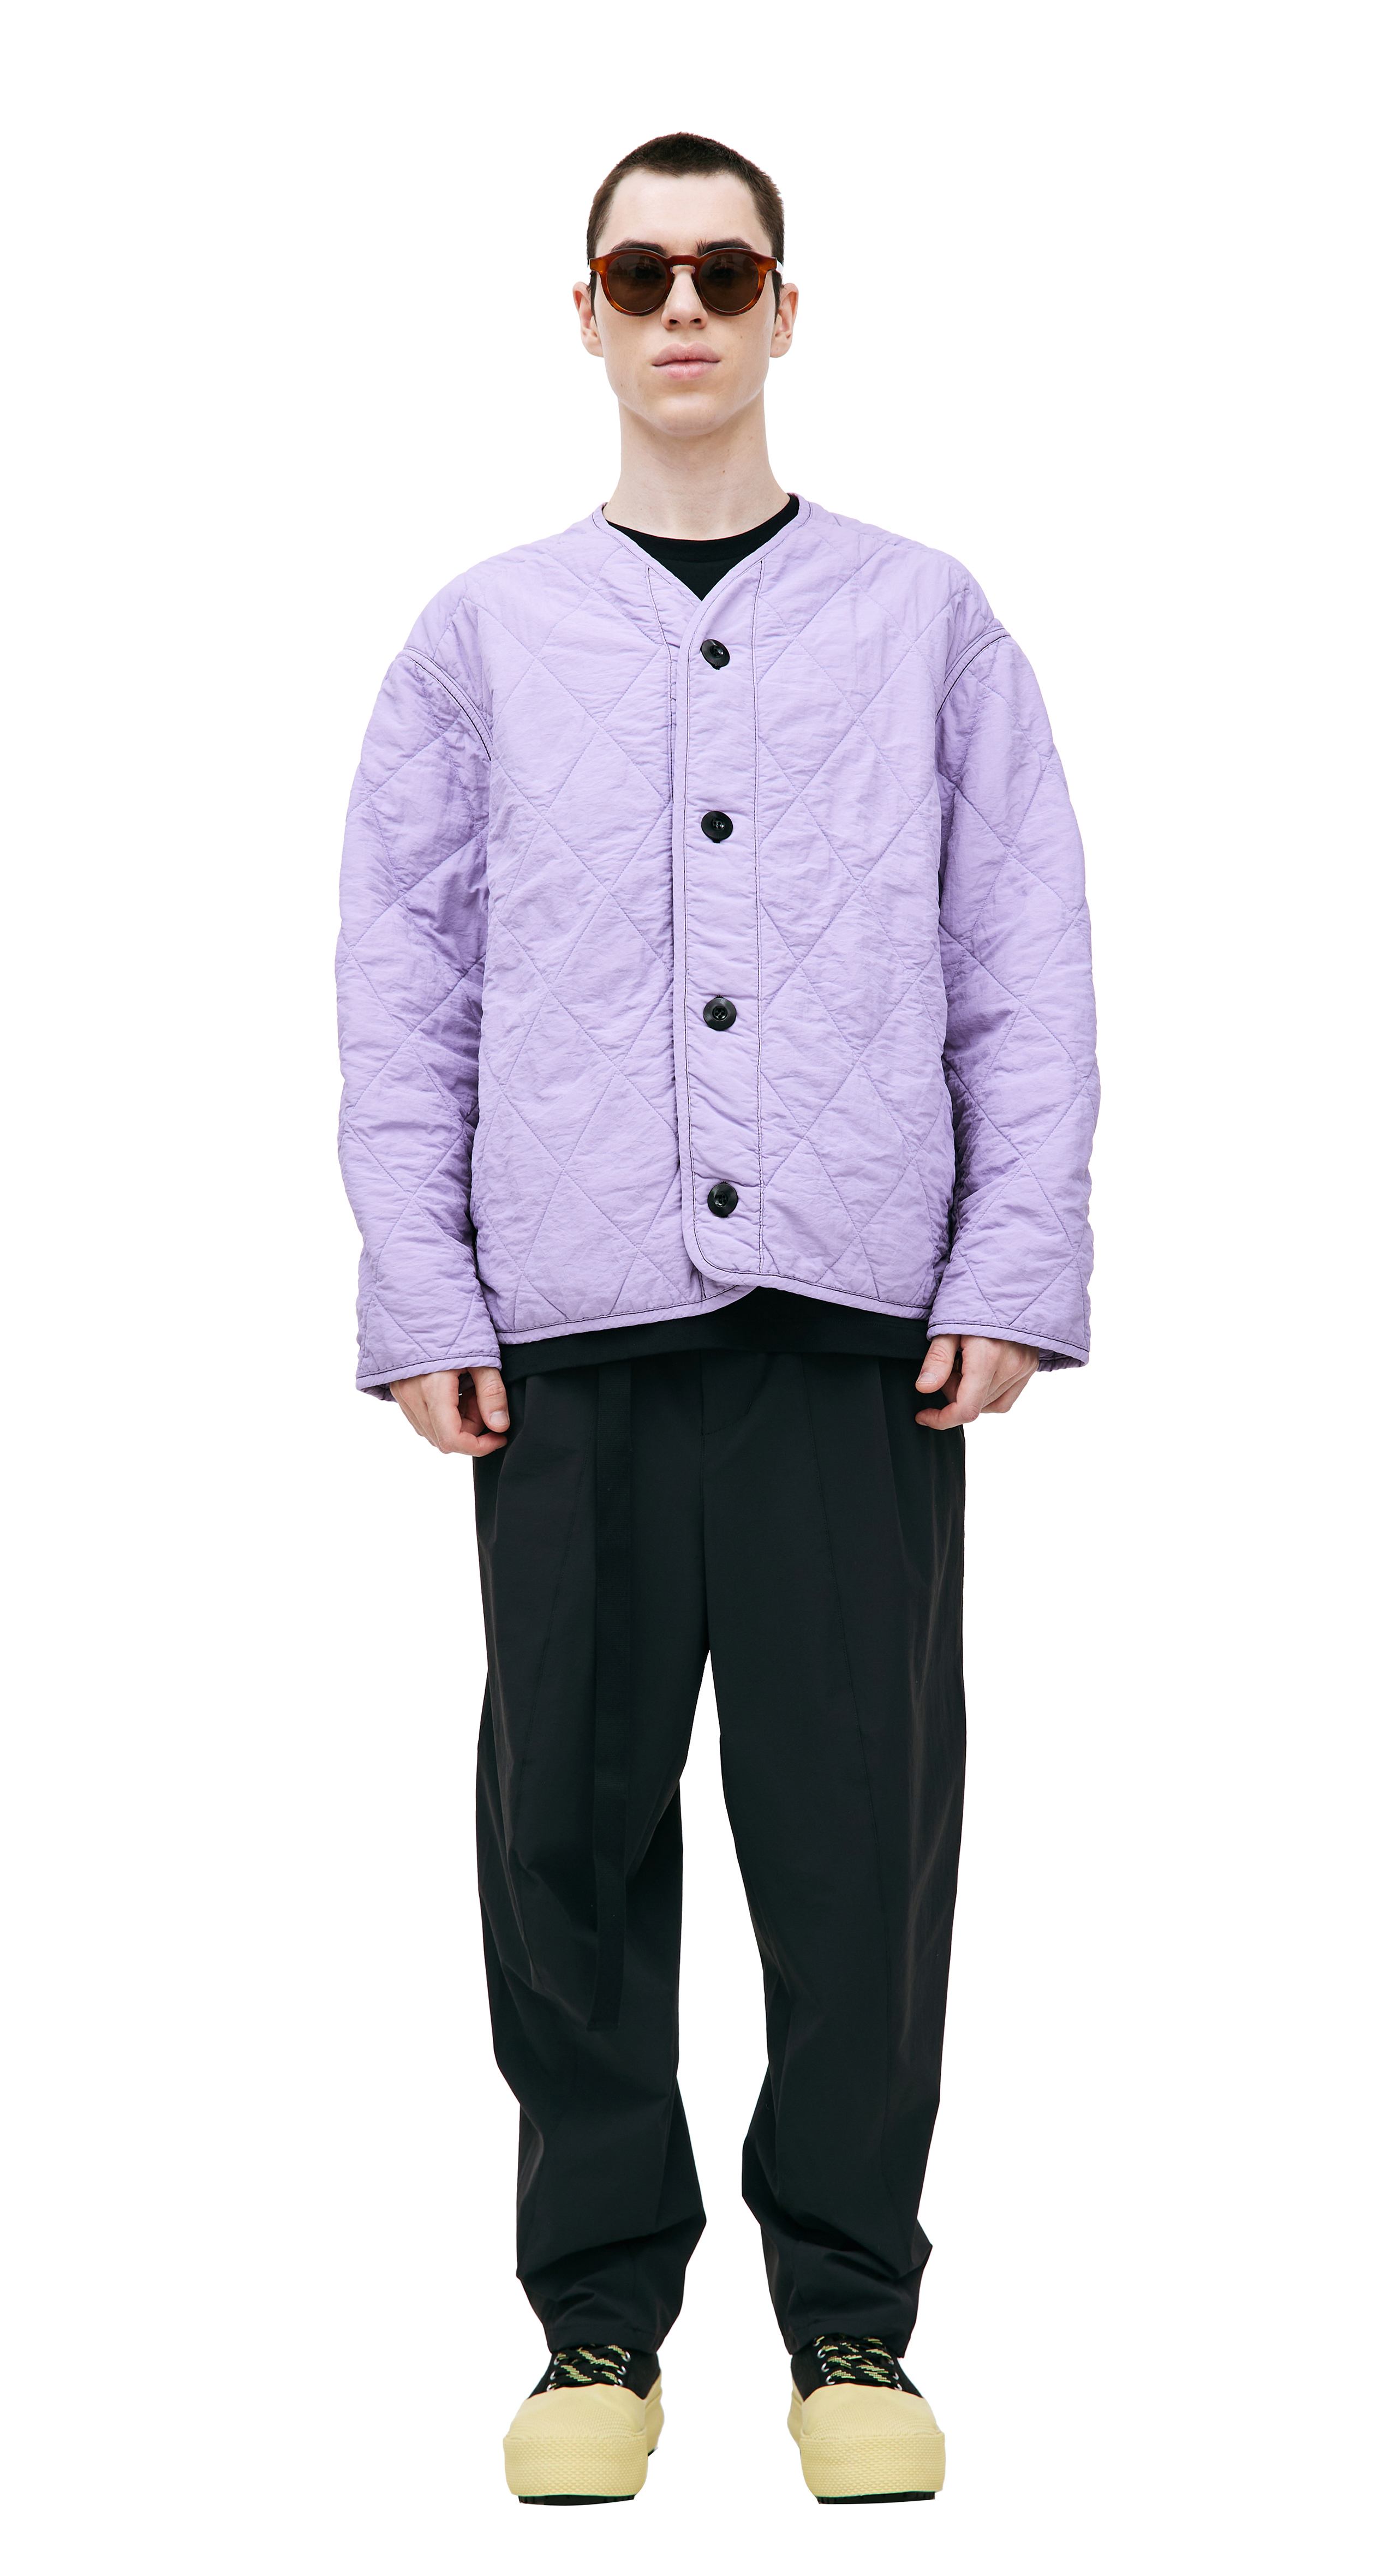 Buy OAMC men light purple combat quilted jacket for $540 online on